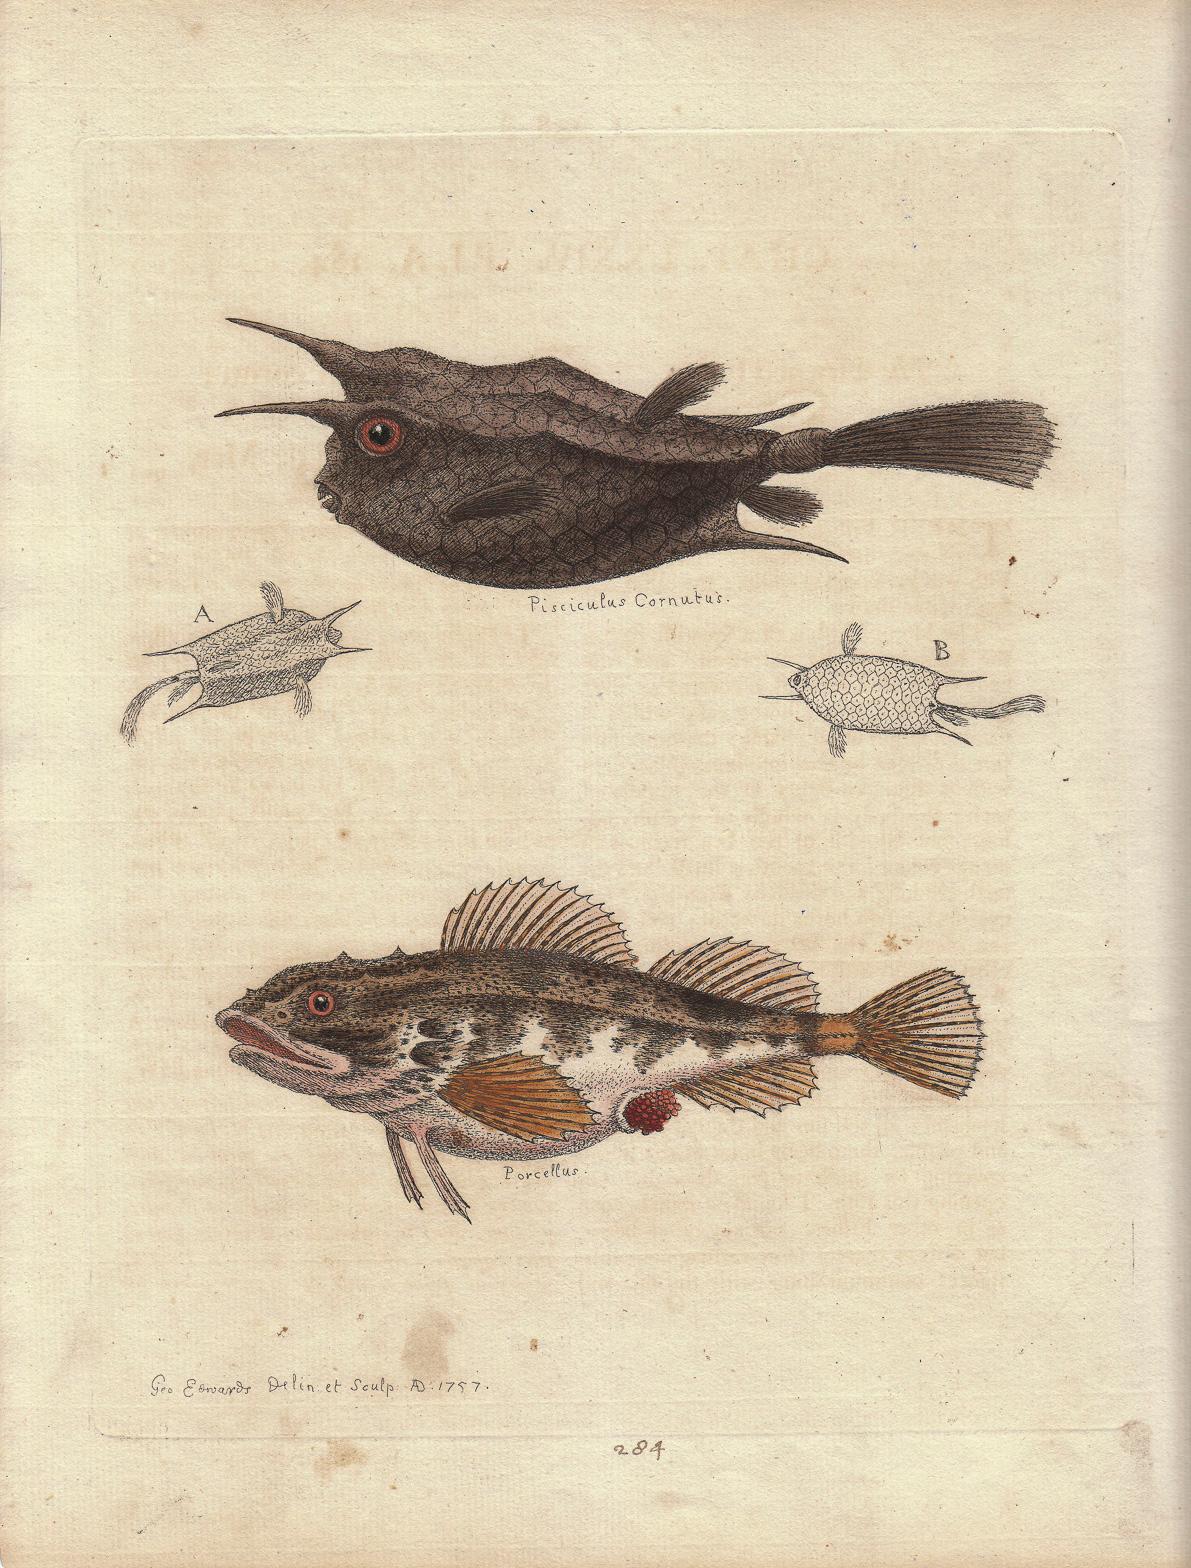 George Edwards Animal Print - Vintage Print, Fish,  "Gleanings of Natural History..." 